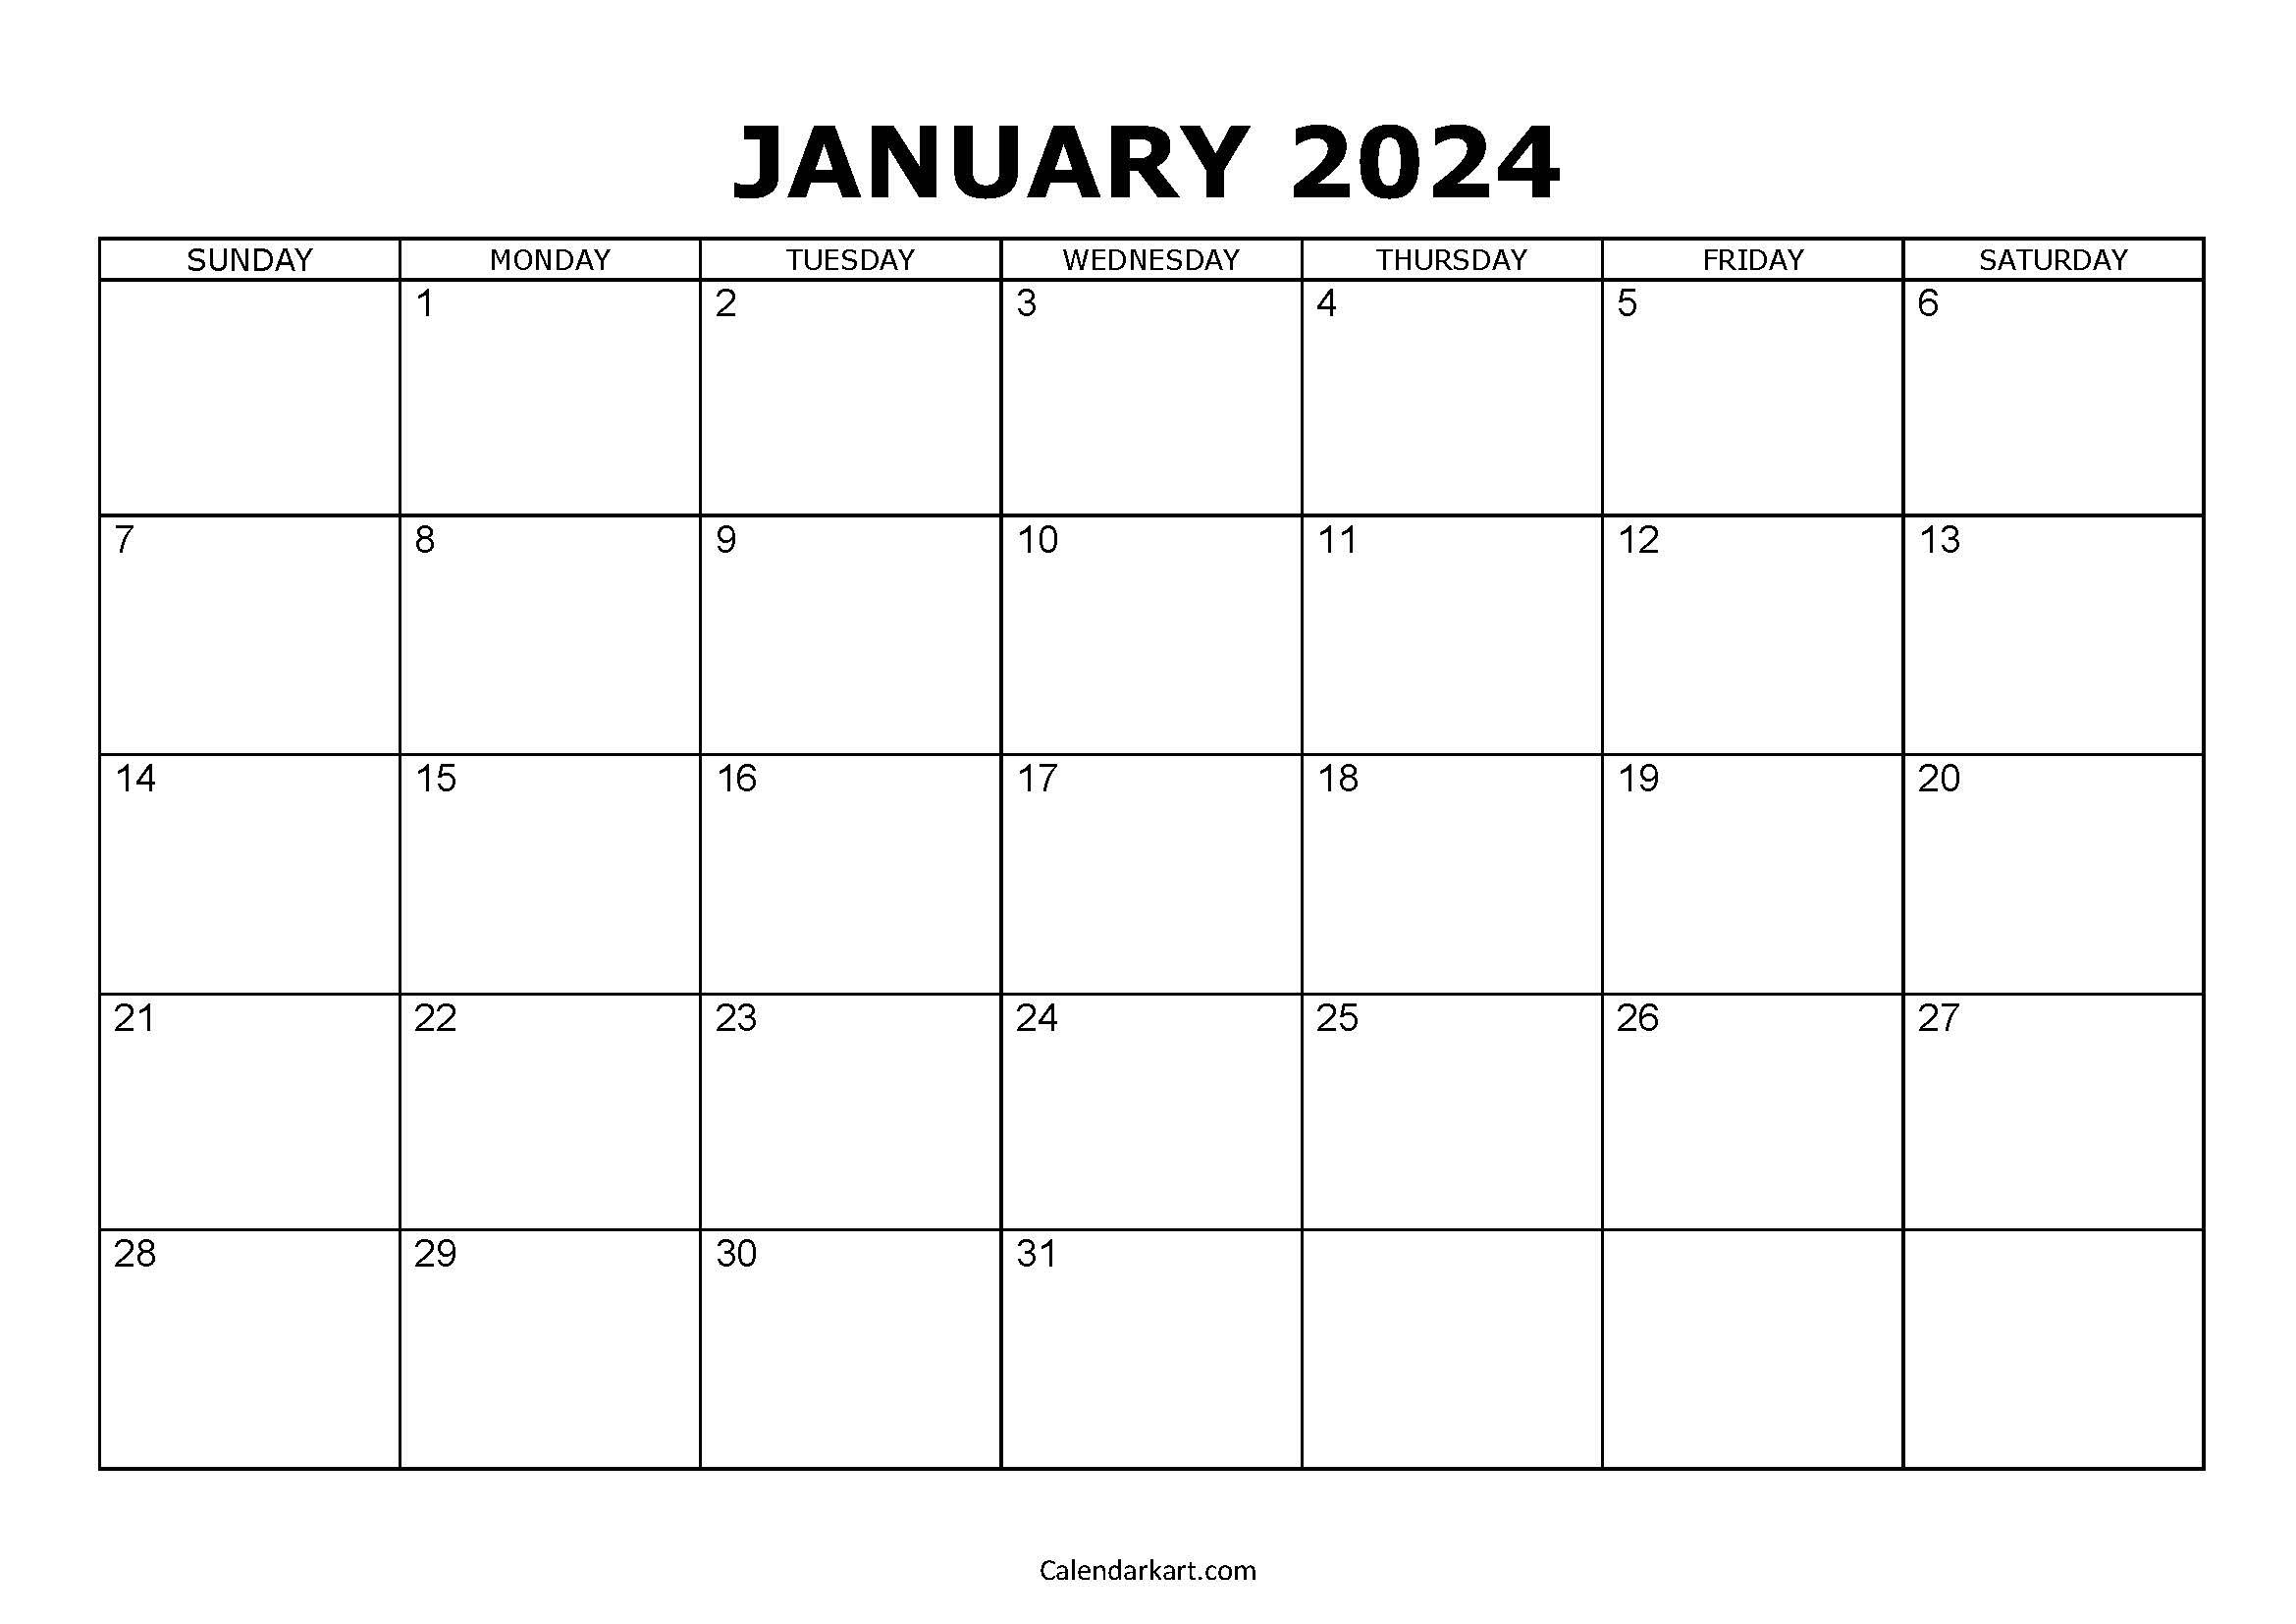 Free Printable January 2024 Calendars - Calendarkart throughout Free Printable Calendar 2024 Editable